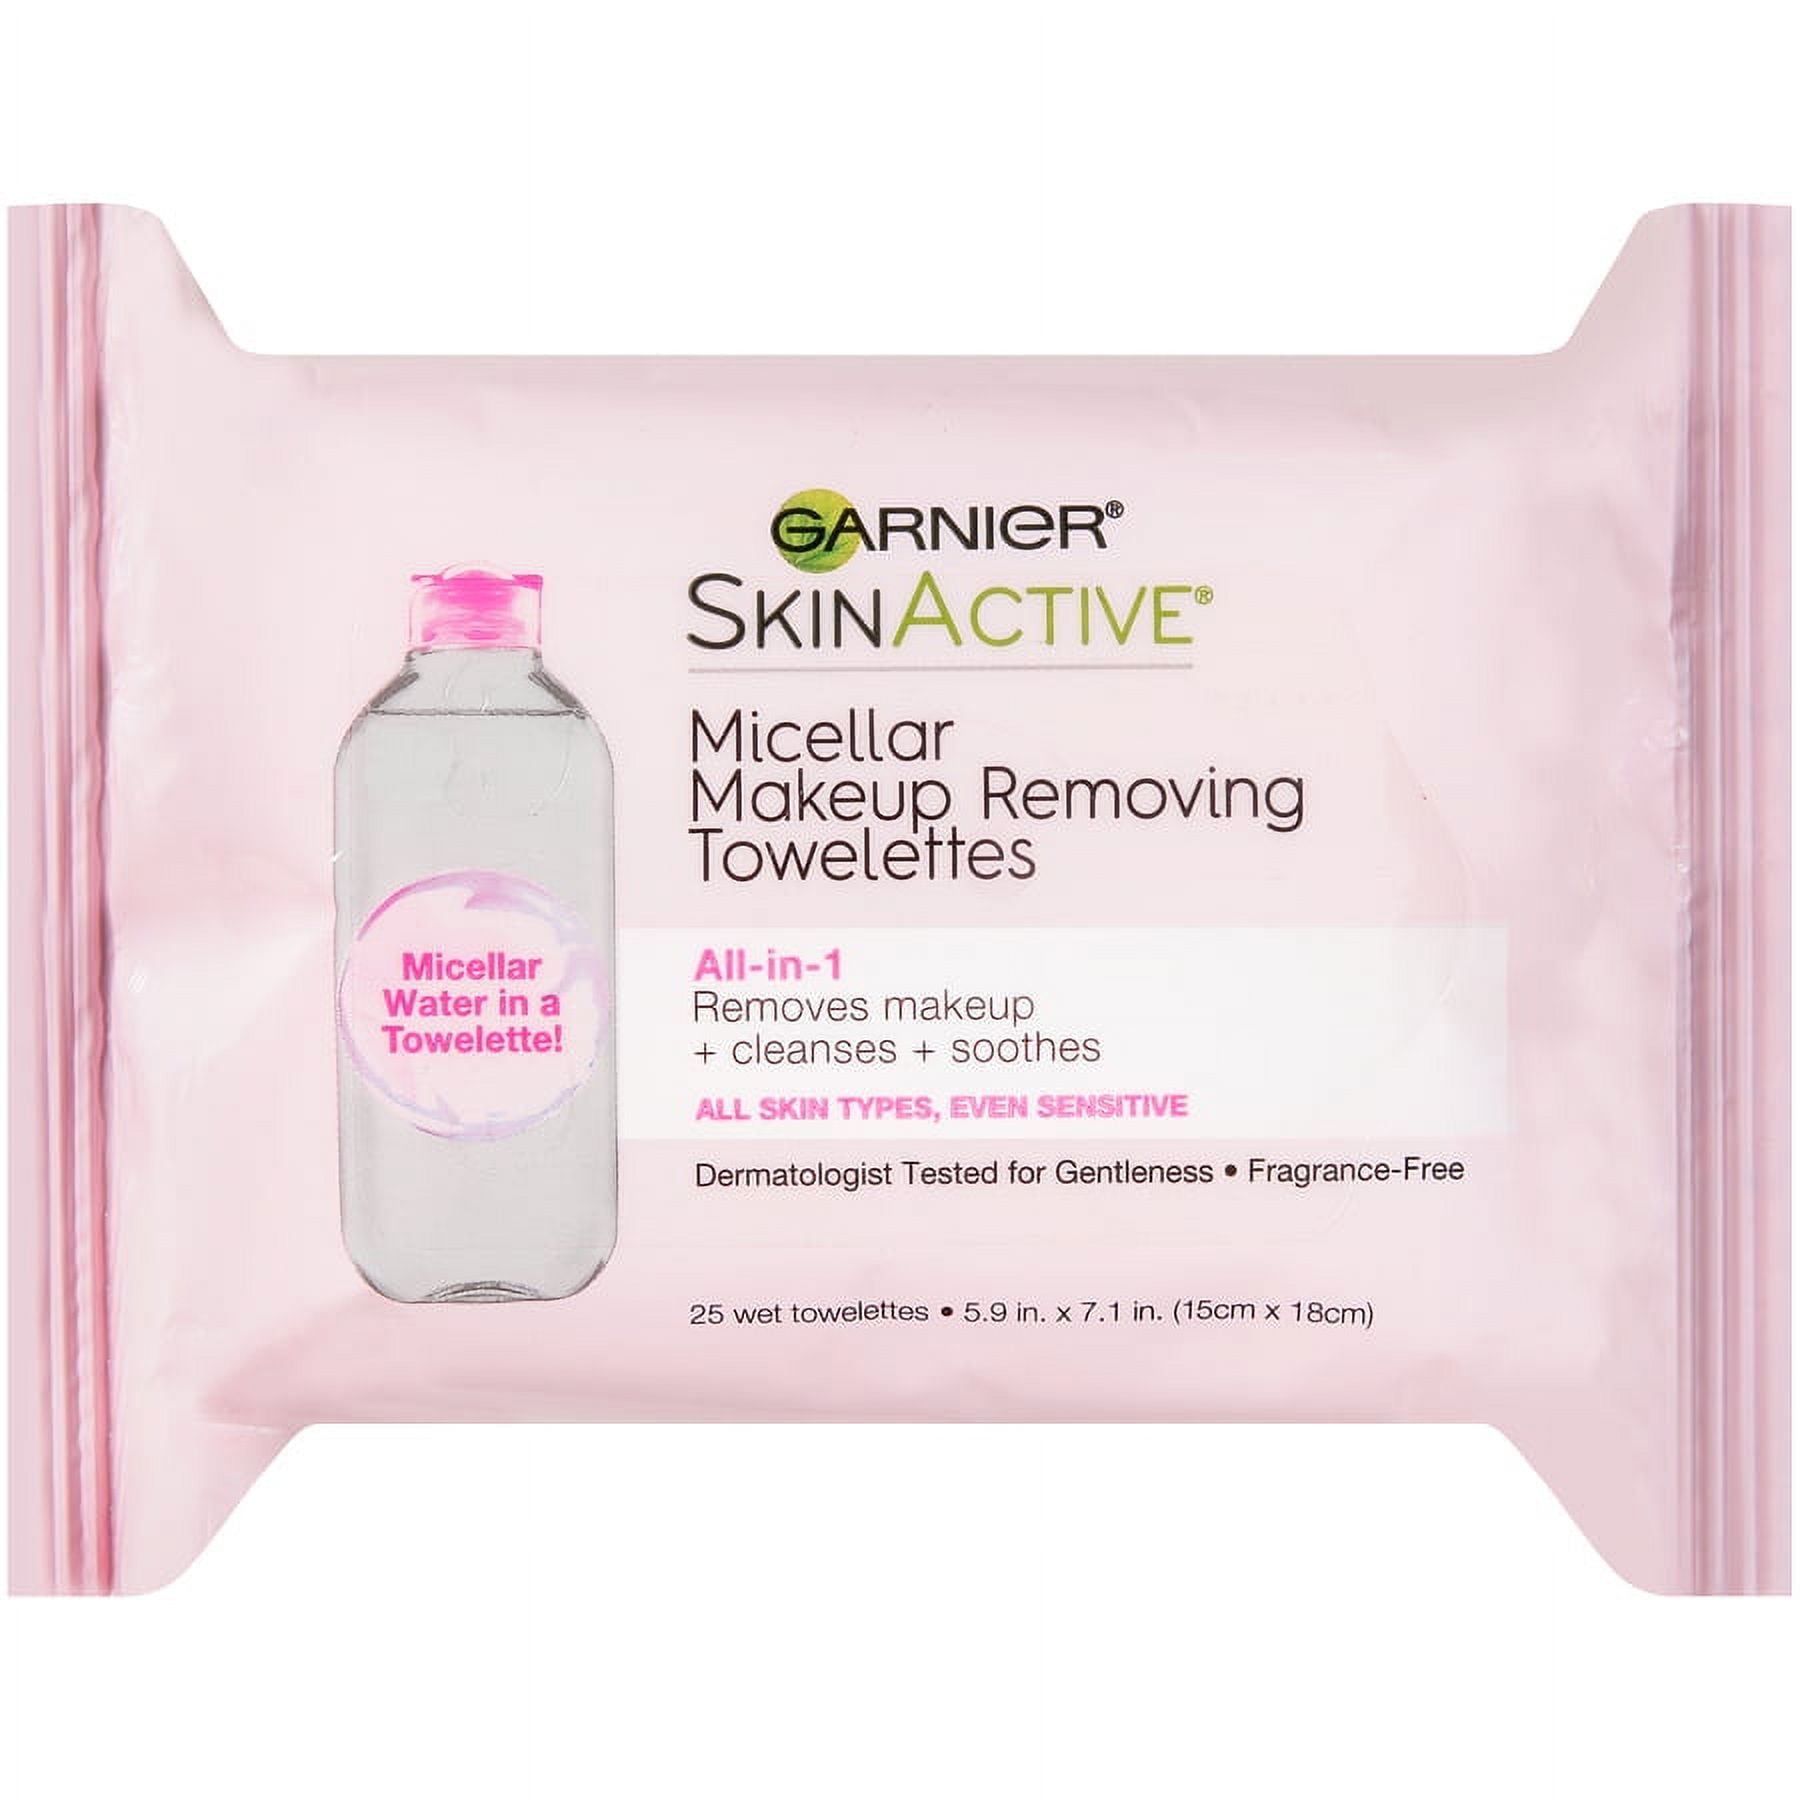 Garnier Skinactive Micellar Makeup Remover Towelettes 25ct